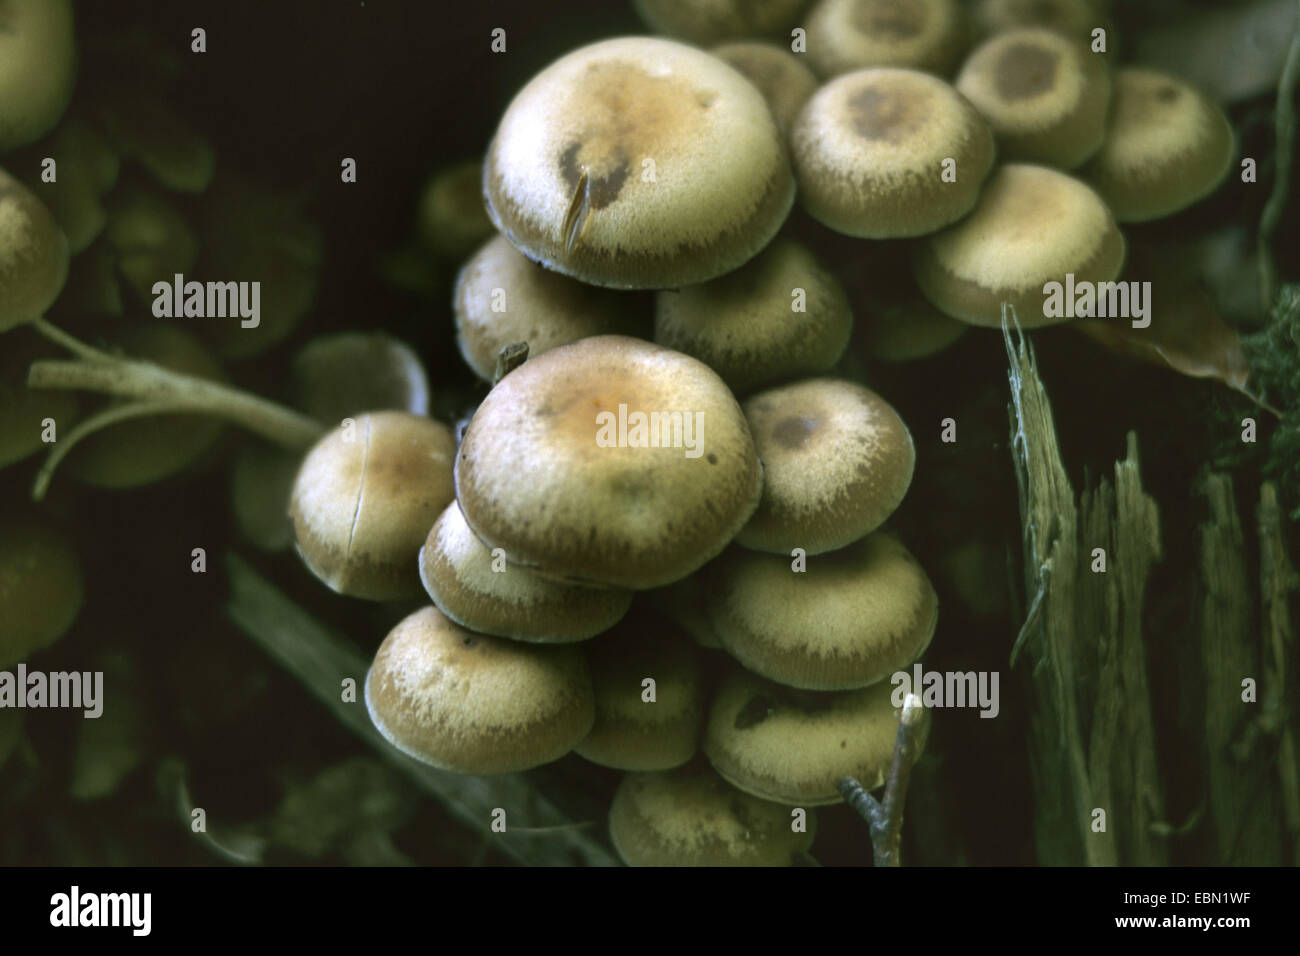 Common stump brittlestem (Psathyrella piluliformis, Psathyrelle hydrophila), fungi, Germany Stock Photo